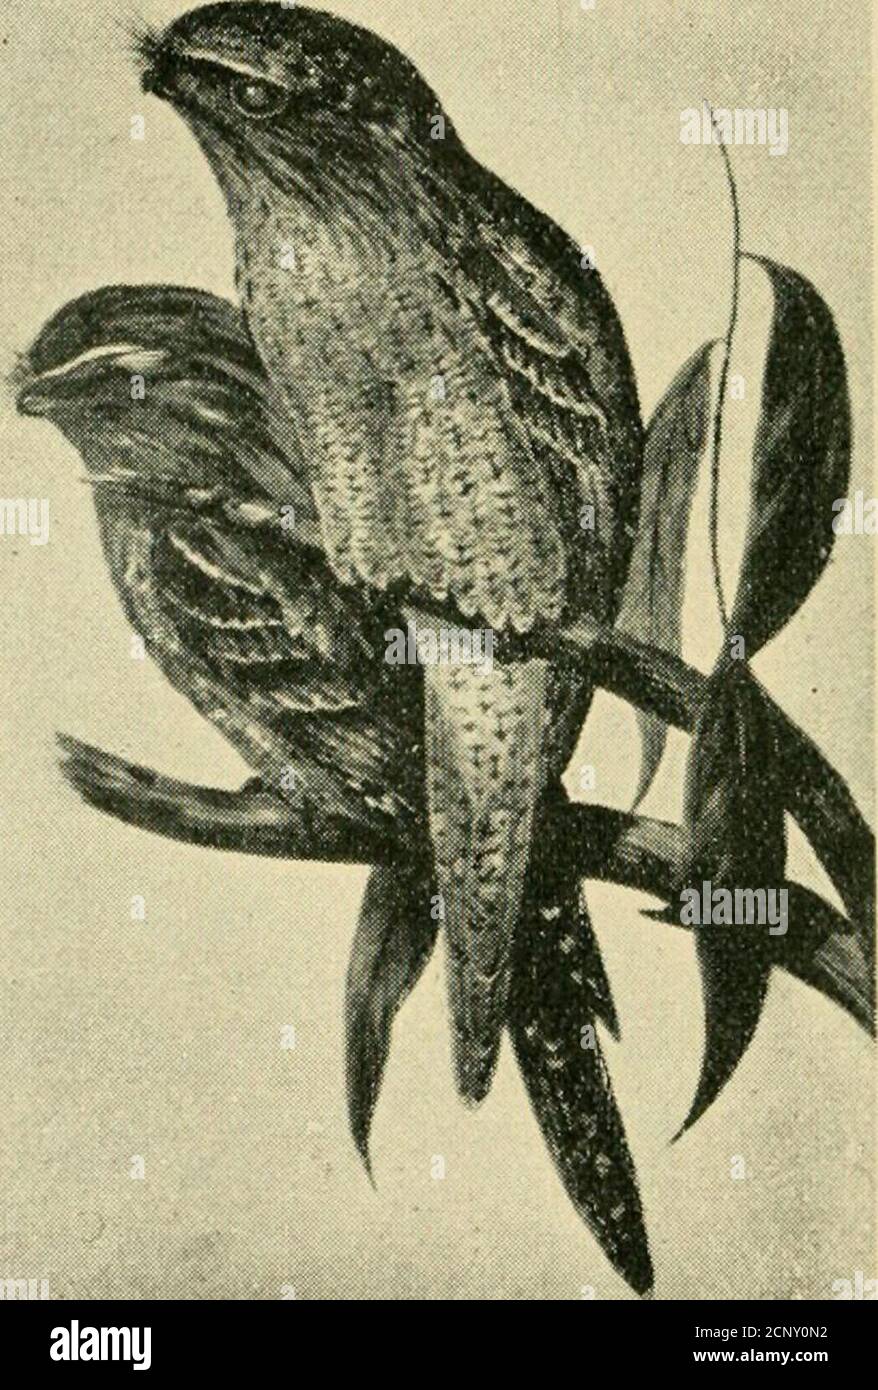 . A key to the birds of Australia : with their geographical distribution . Species 401.—Spotted-sided Finch (J nat. size)Upper fig., male ; lower fig., female. Genus-BATHILDA. 413. ruQcauda : rufus, red ; cauda, tail. Genus—POEPHILA : poa, grass ; pkileo, to love. 414. acuticauda : acutus, sharp ; cauda, tail. 415. clncta : cincius, girdled. 416. personata : persona, mask. 417. leucotis : (eukos, white ; ous, otis, ear. 418. mirabilis : mirabilis, wonderful.gouldiae: Oould. a proper name.armitiana: apparently from a proper name. 419. atropygialis : ater, black ; pyga, rump. Genus—NEOCHMIA : ne Stock Photo